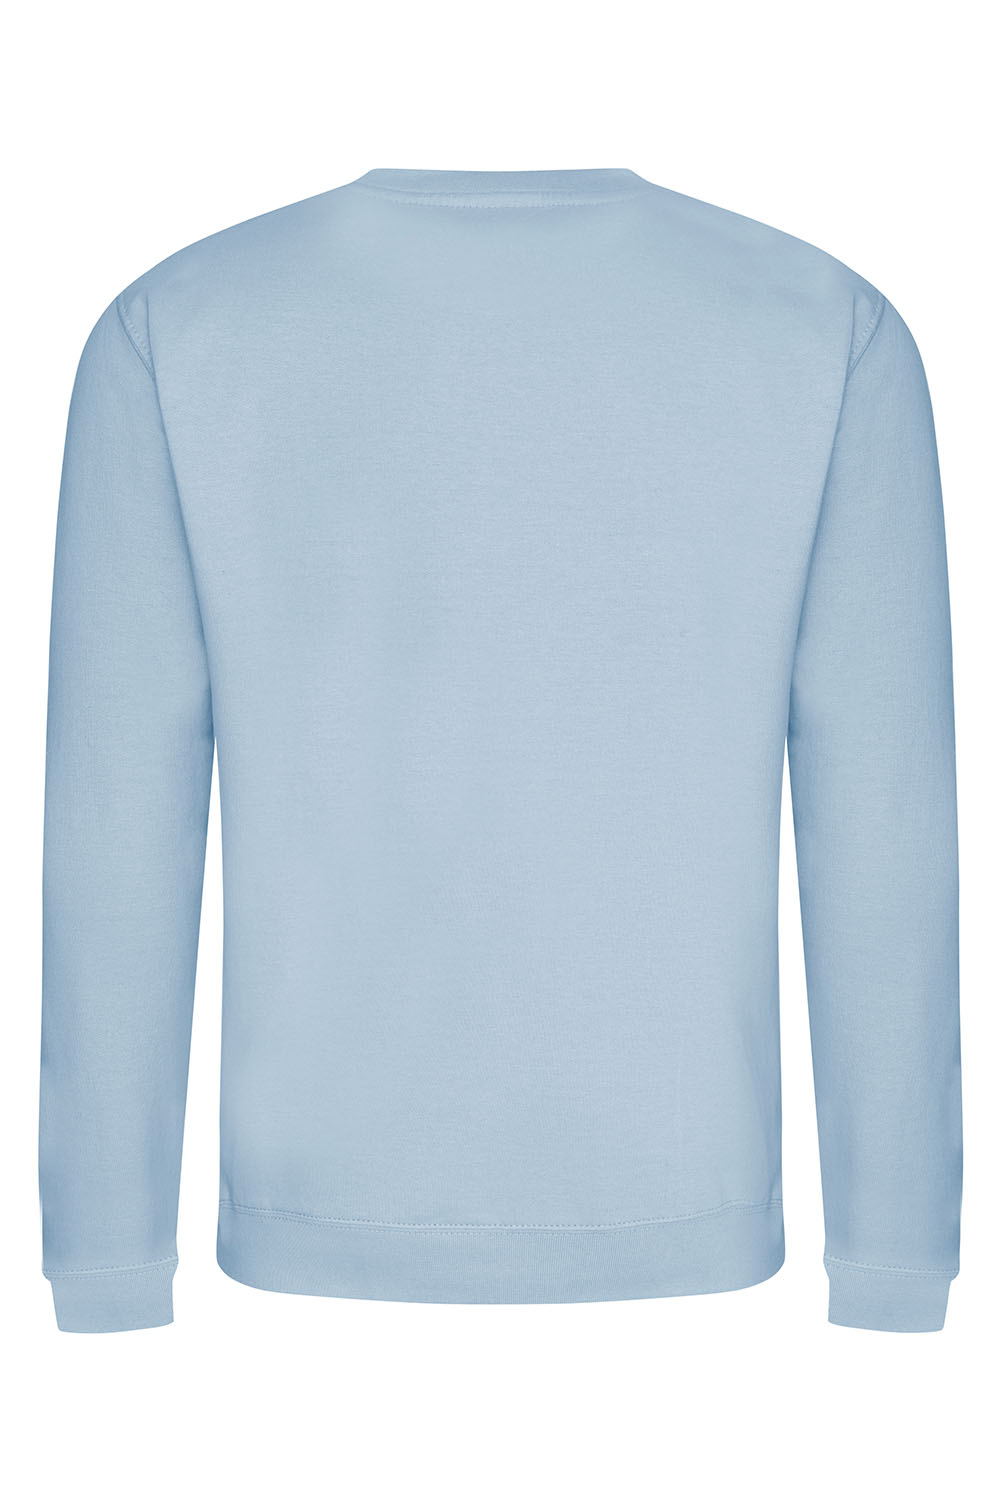 Santa Monica Sweatshirt In Powder Blue (Custom Pack)